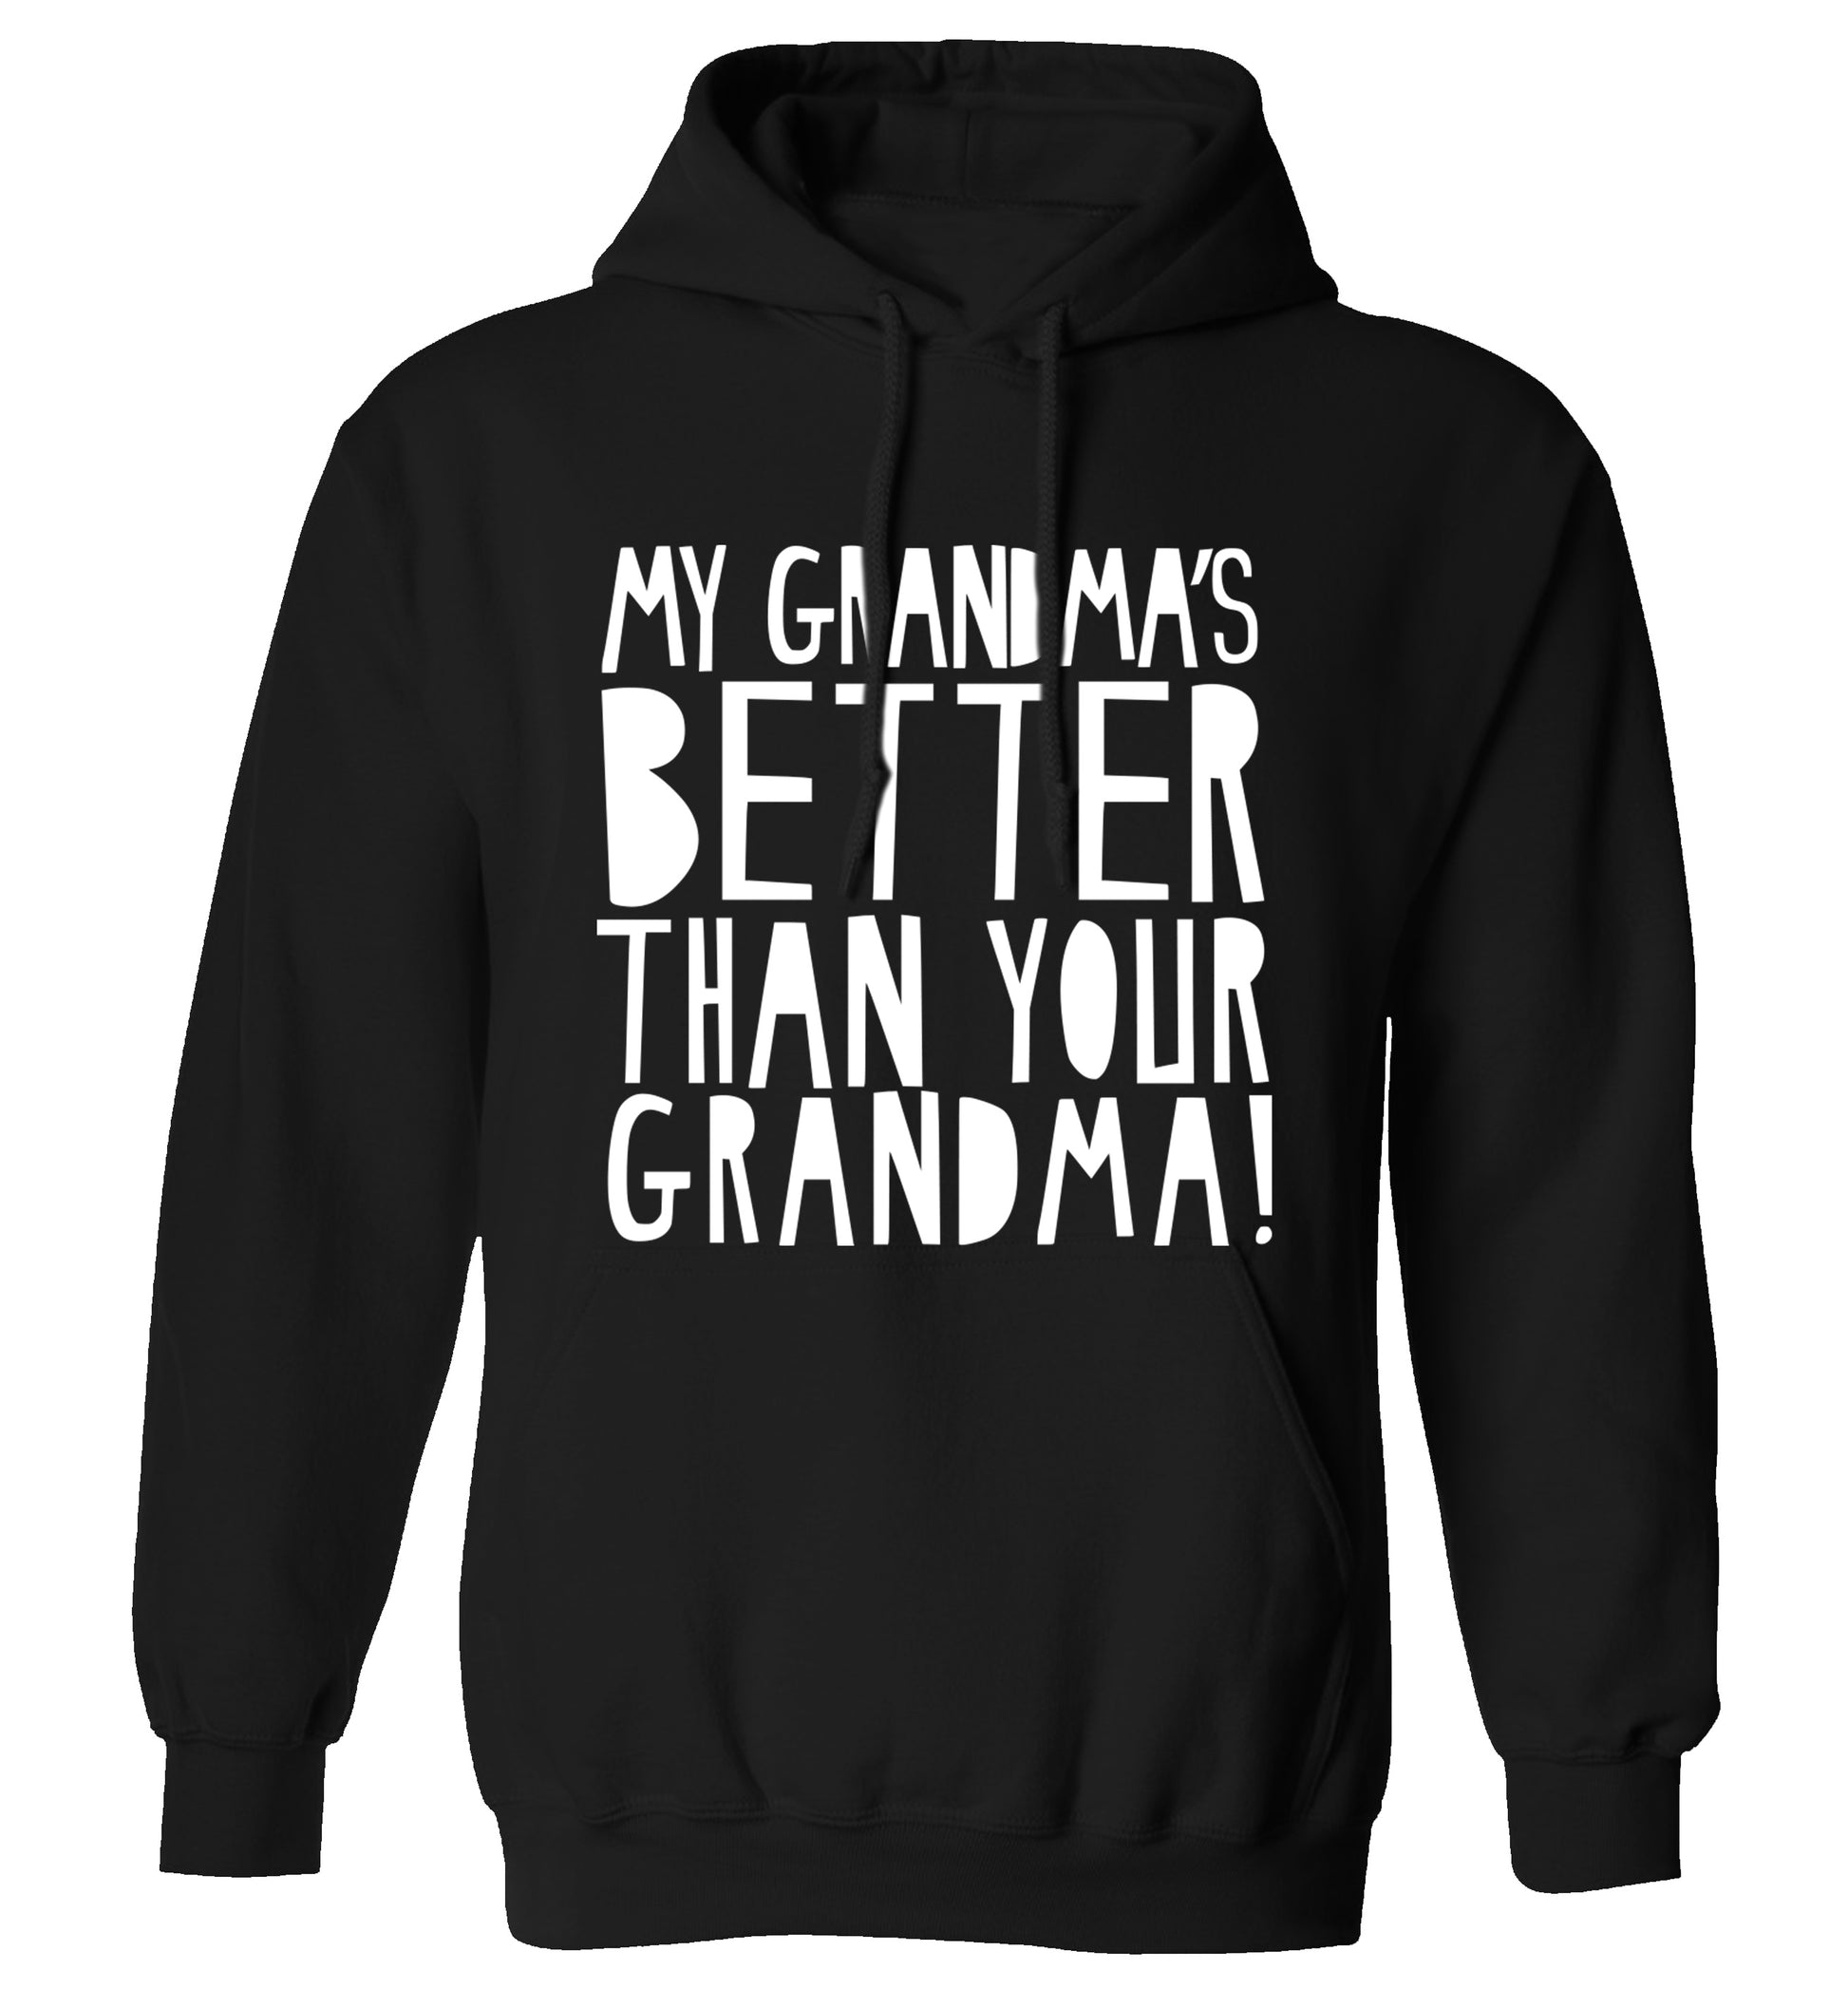 My grandma's better than your grandma adults unisex black hoodie 2XL